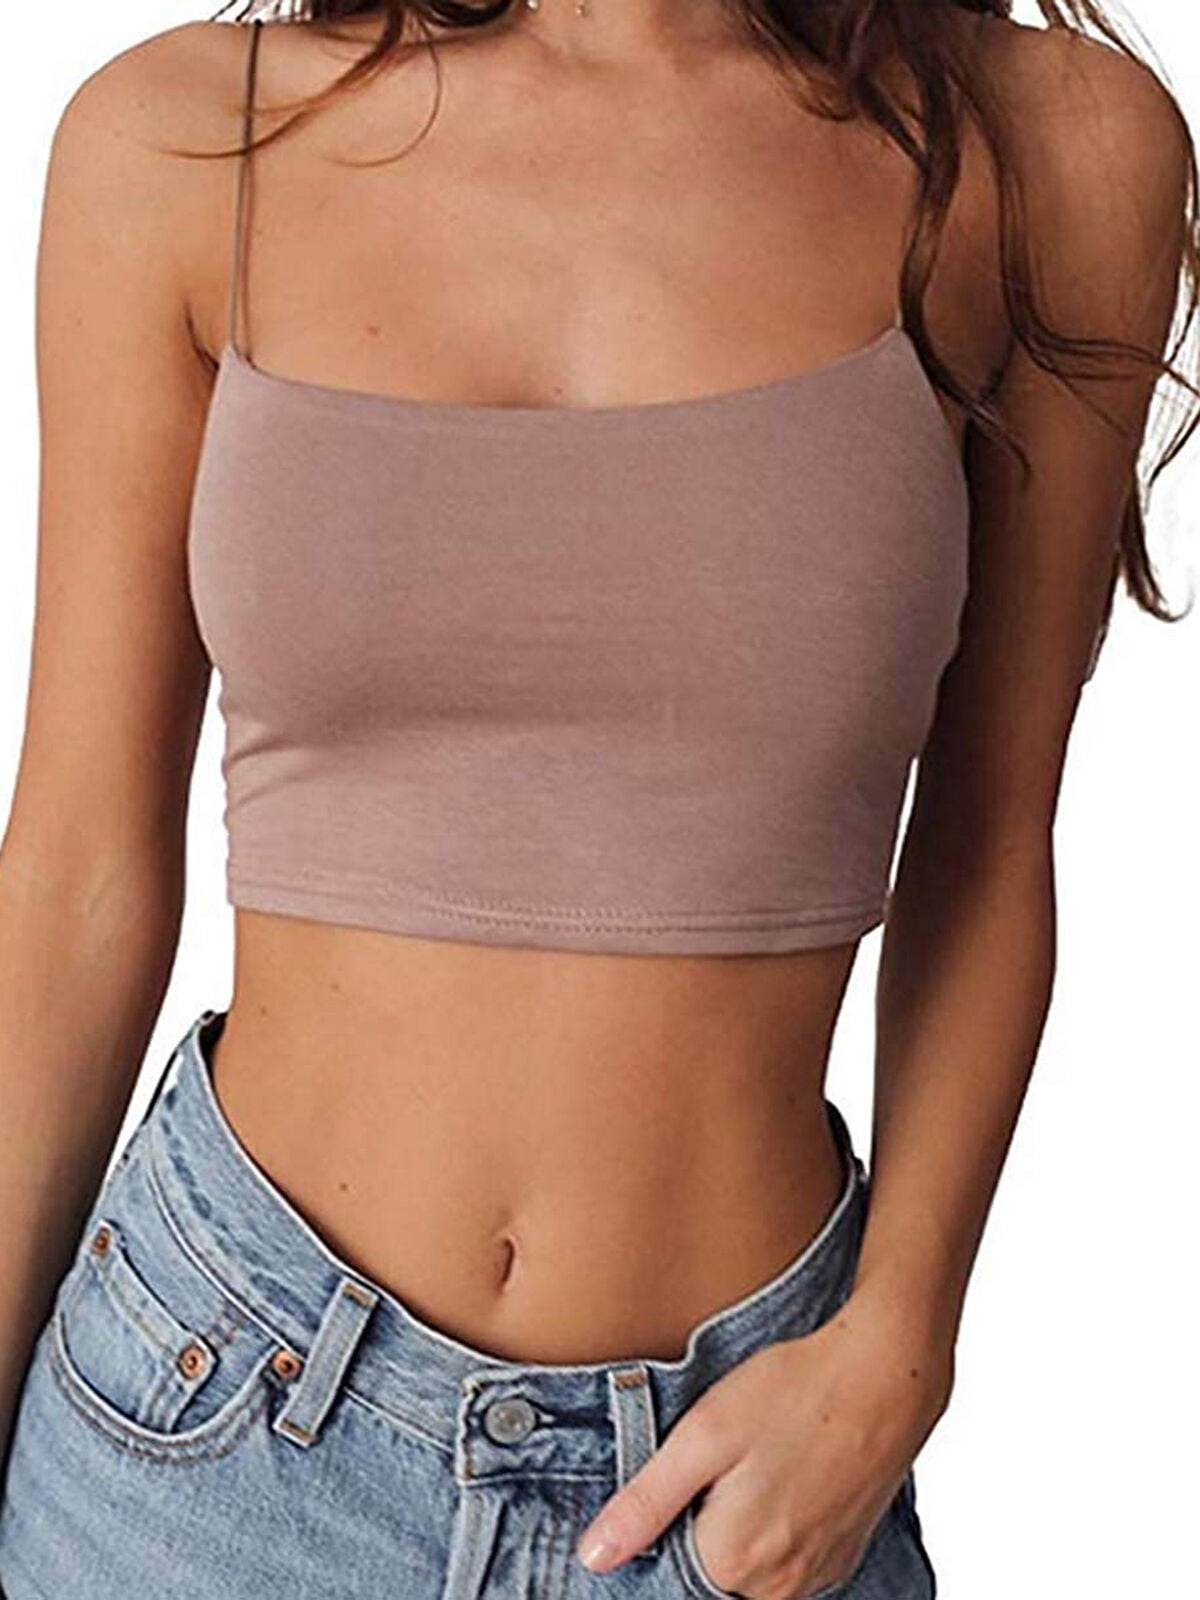 Women's Sleeveless Summer Bustier Crop Top Vest Halter Cami Tank Tops Blouse